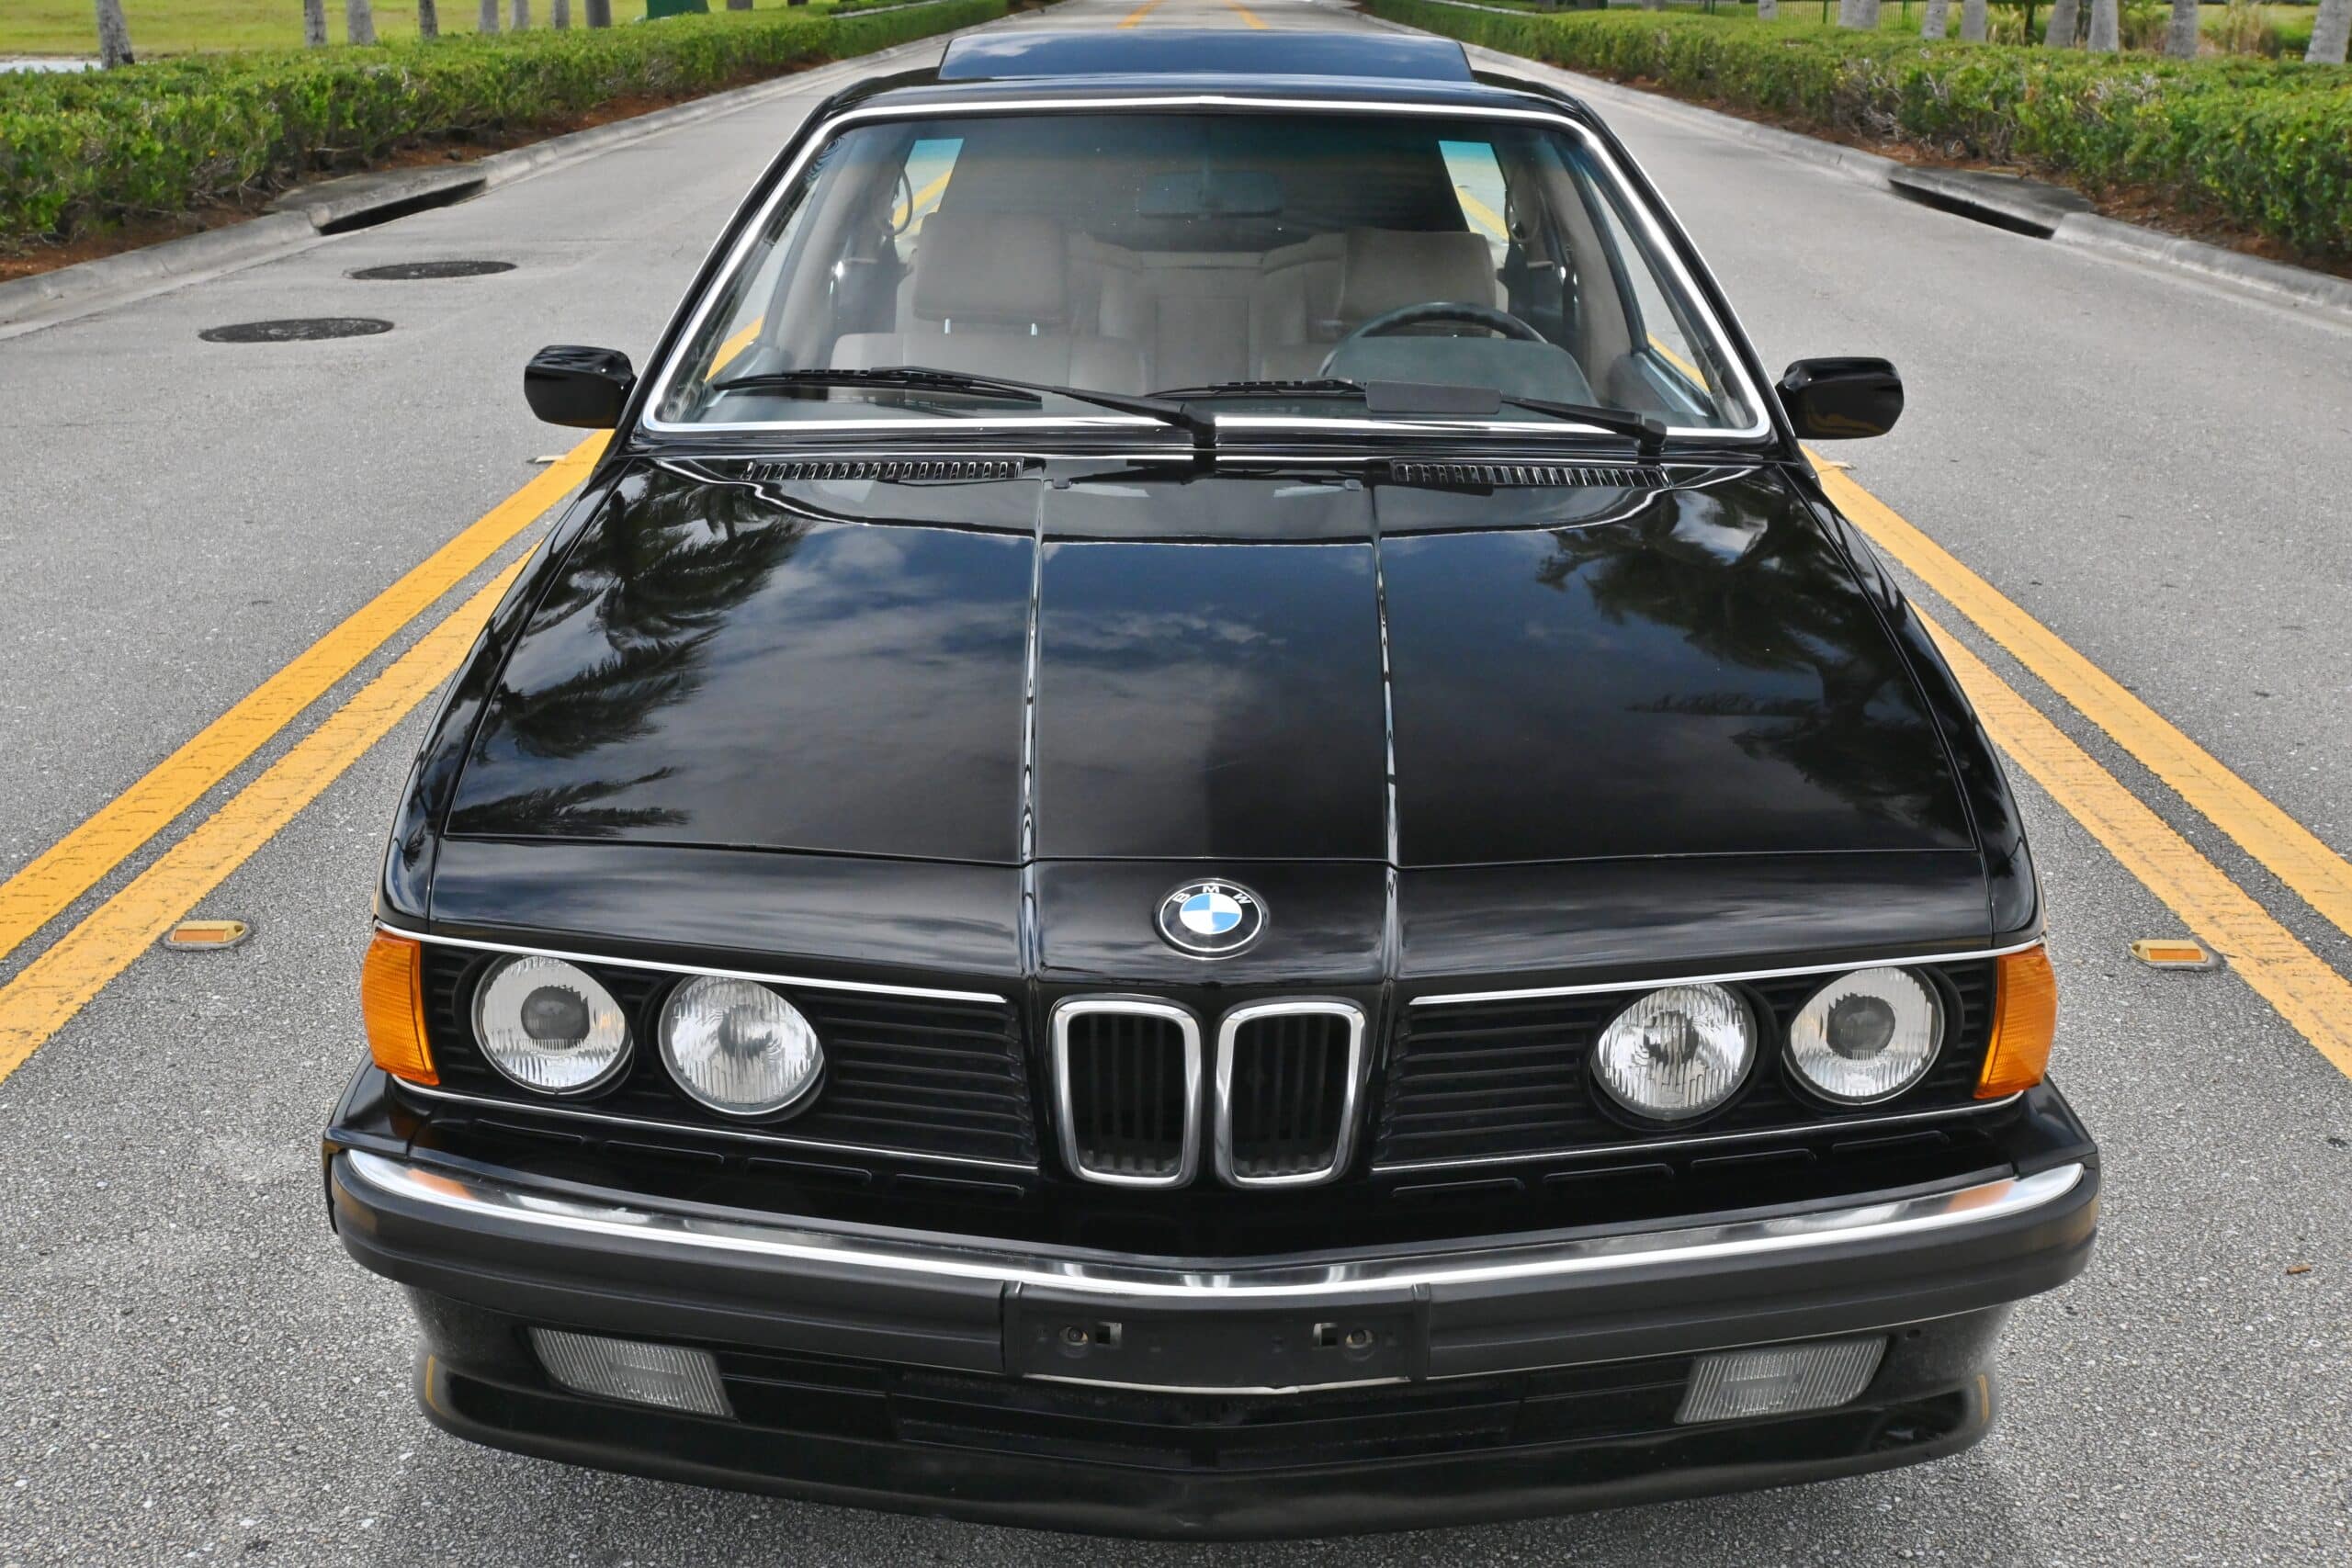 1988 BMW 635CSi E24 Sharknose – California Car – Unmodified – Clean condition